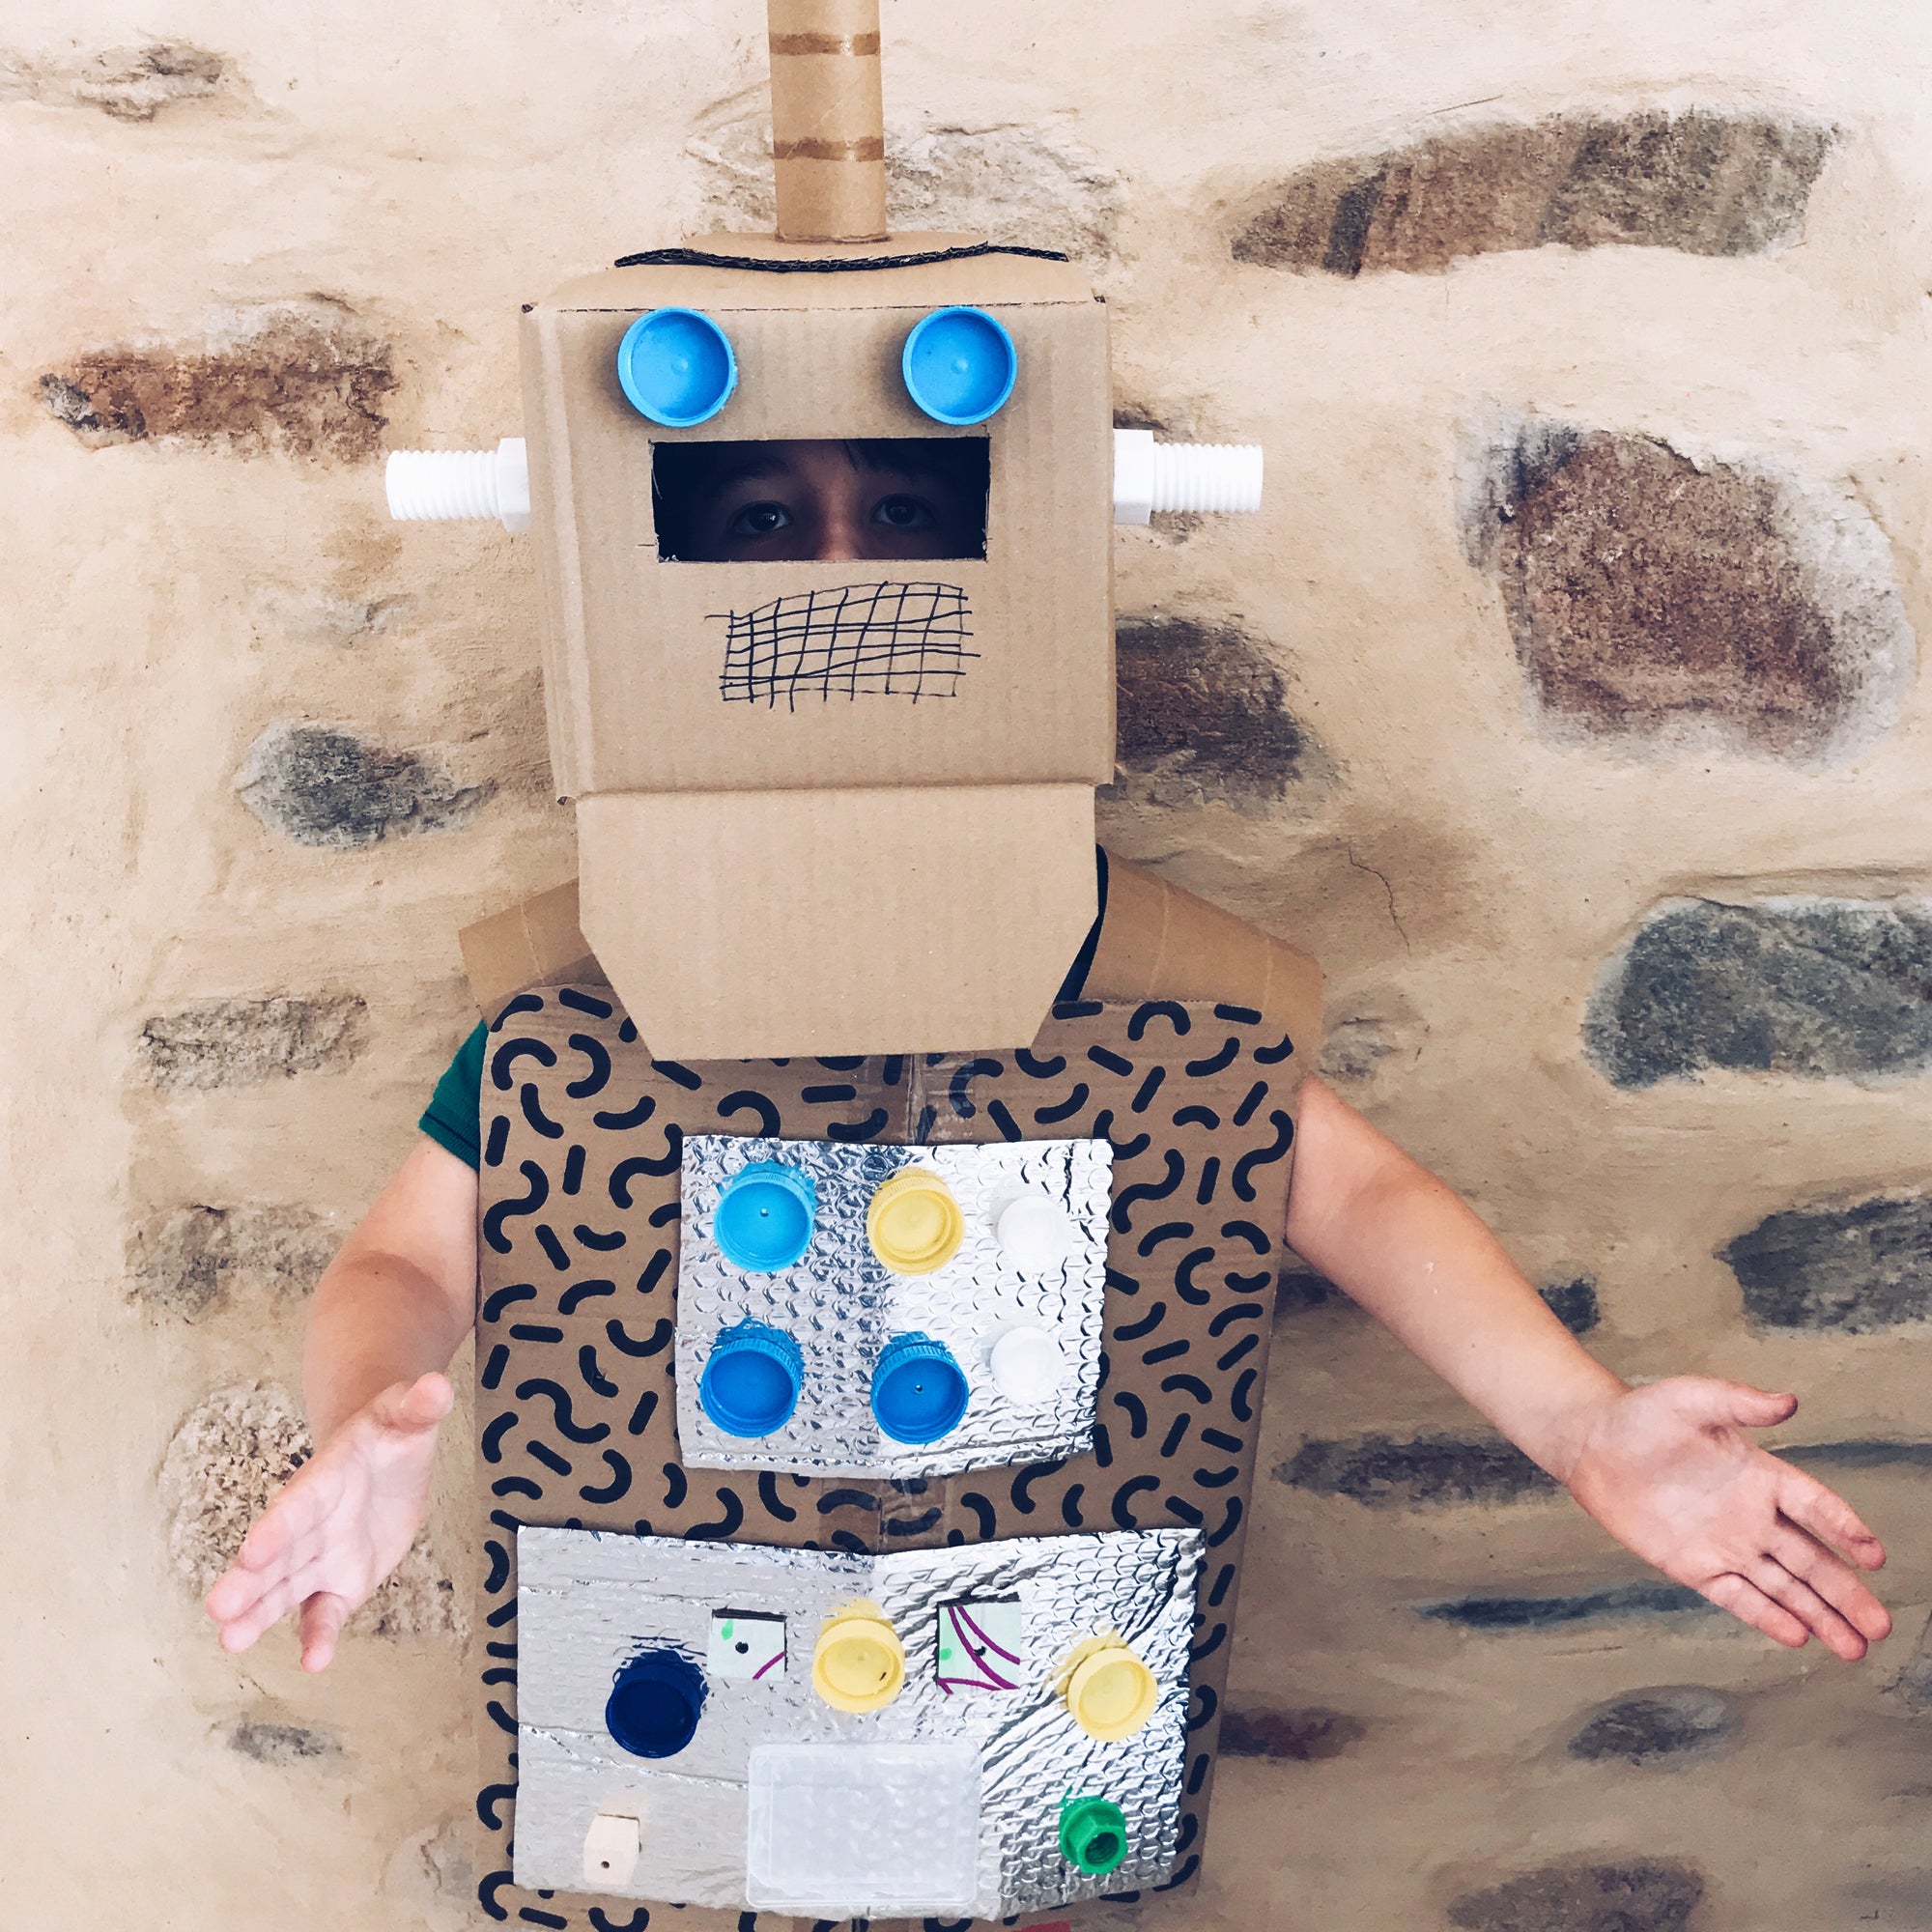 Игра костюм робота. Костюм робота. Робо костюмы. Костюм робота для мальчика. Робот костюм для ребенка.